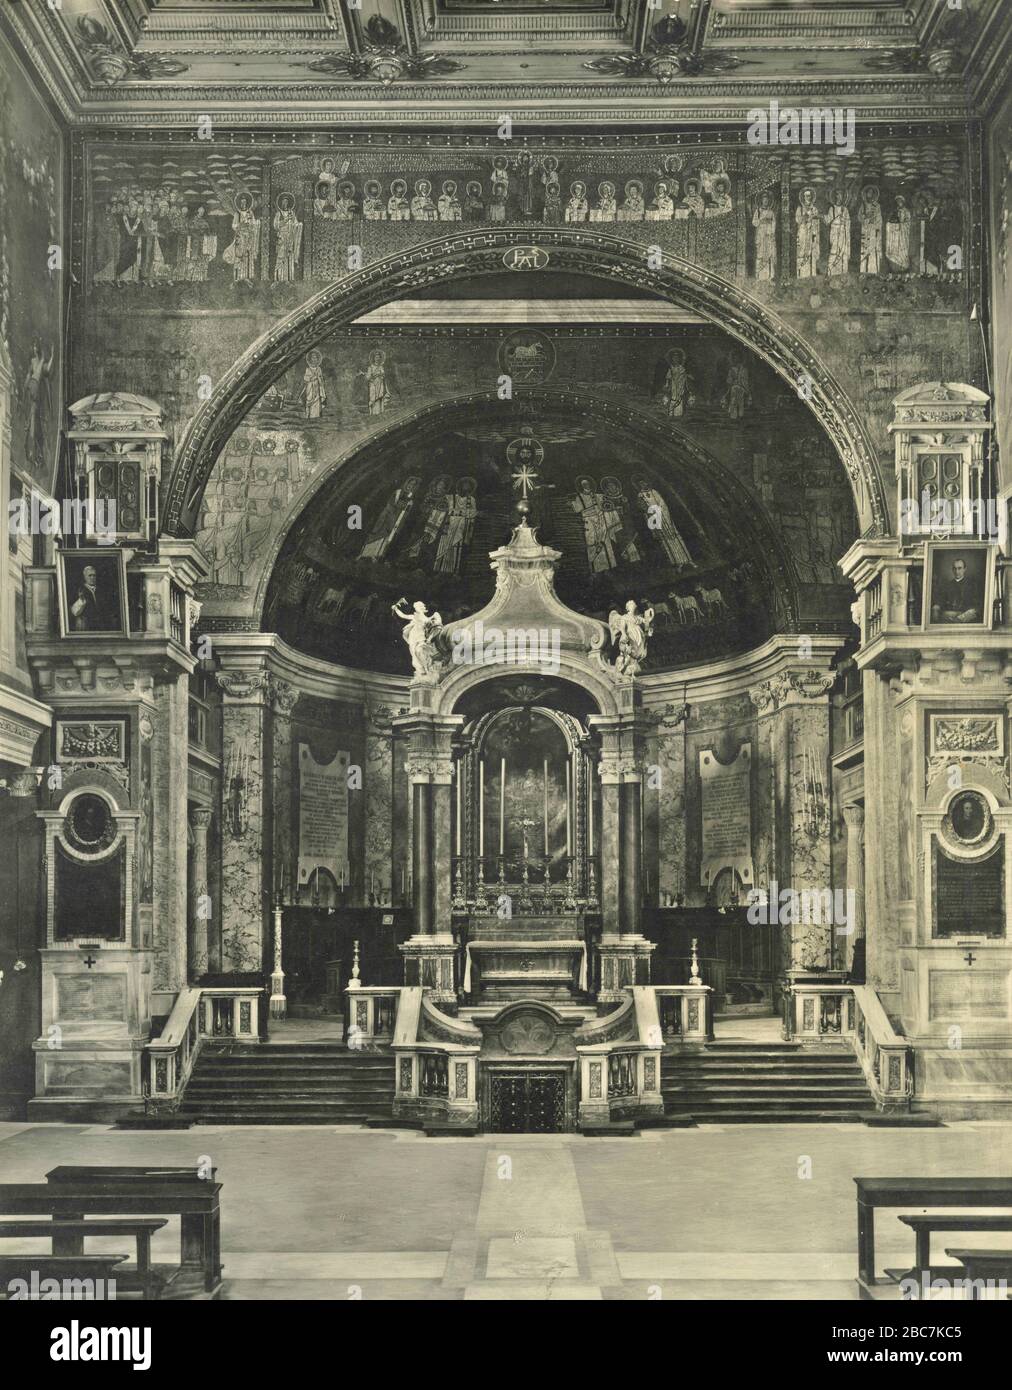 The Tribune of S. Prassede church, Rome, Italy 1920s Stock Photo